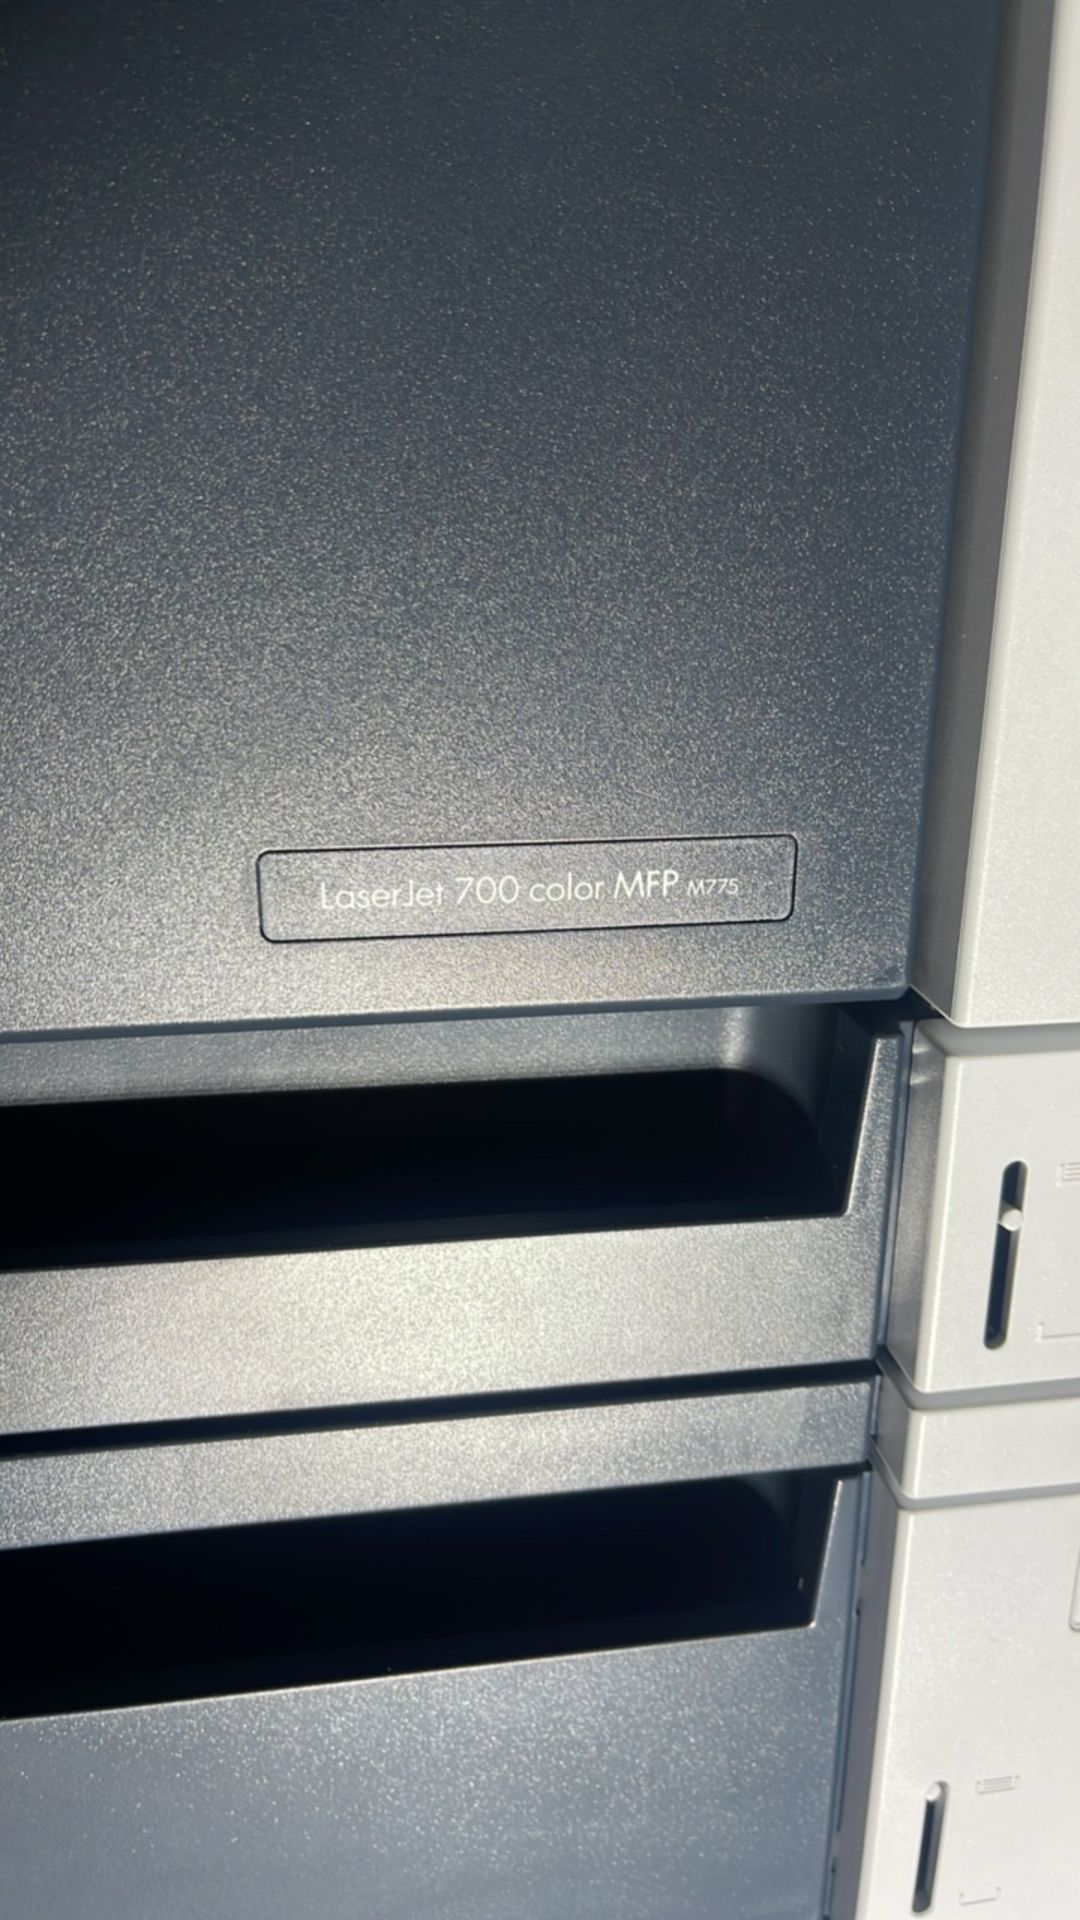 HP LaserJet 700 Color MFP Printer - Image 2 of 6